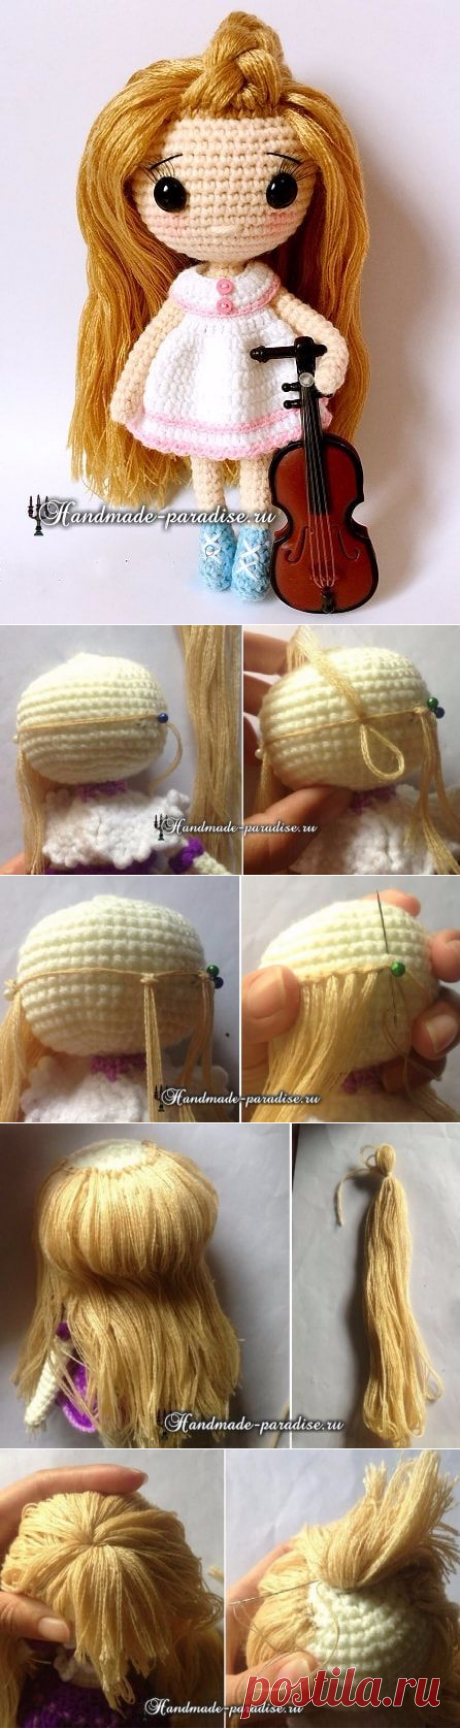 Как сделать волосы куколке амигуруми - Handmade-Paradise